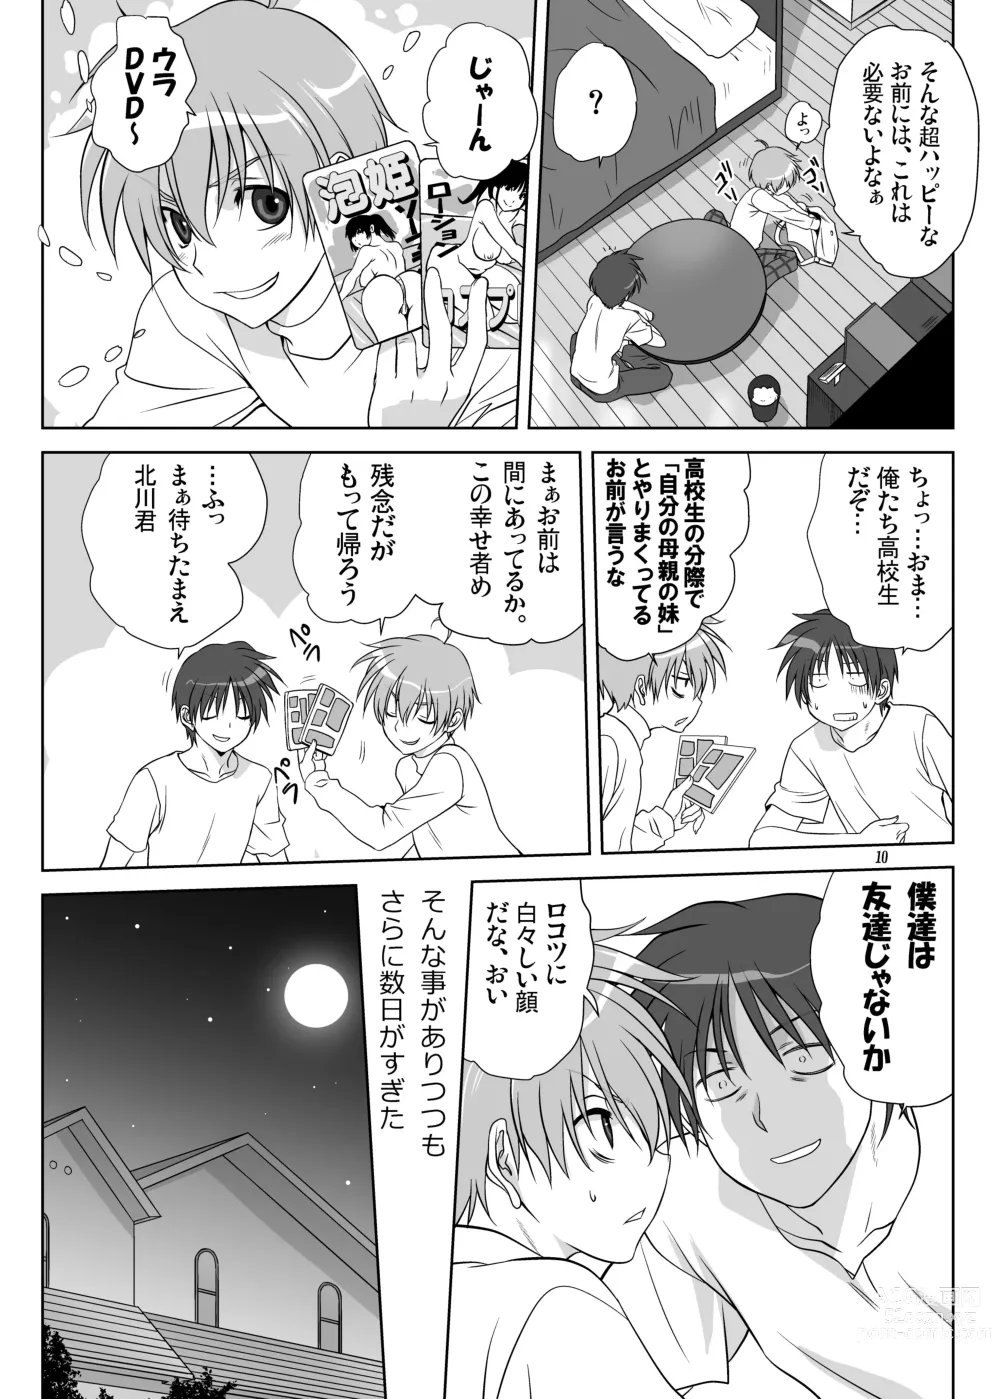 Page 9 of doujinshi Akiko-san to Issho 11